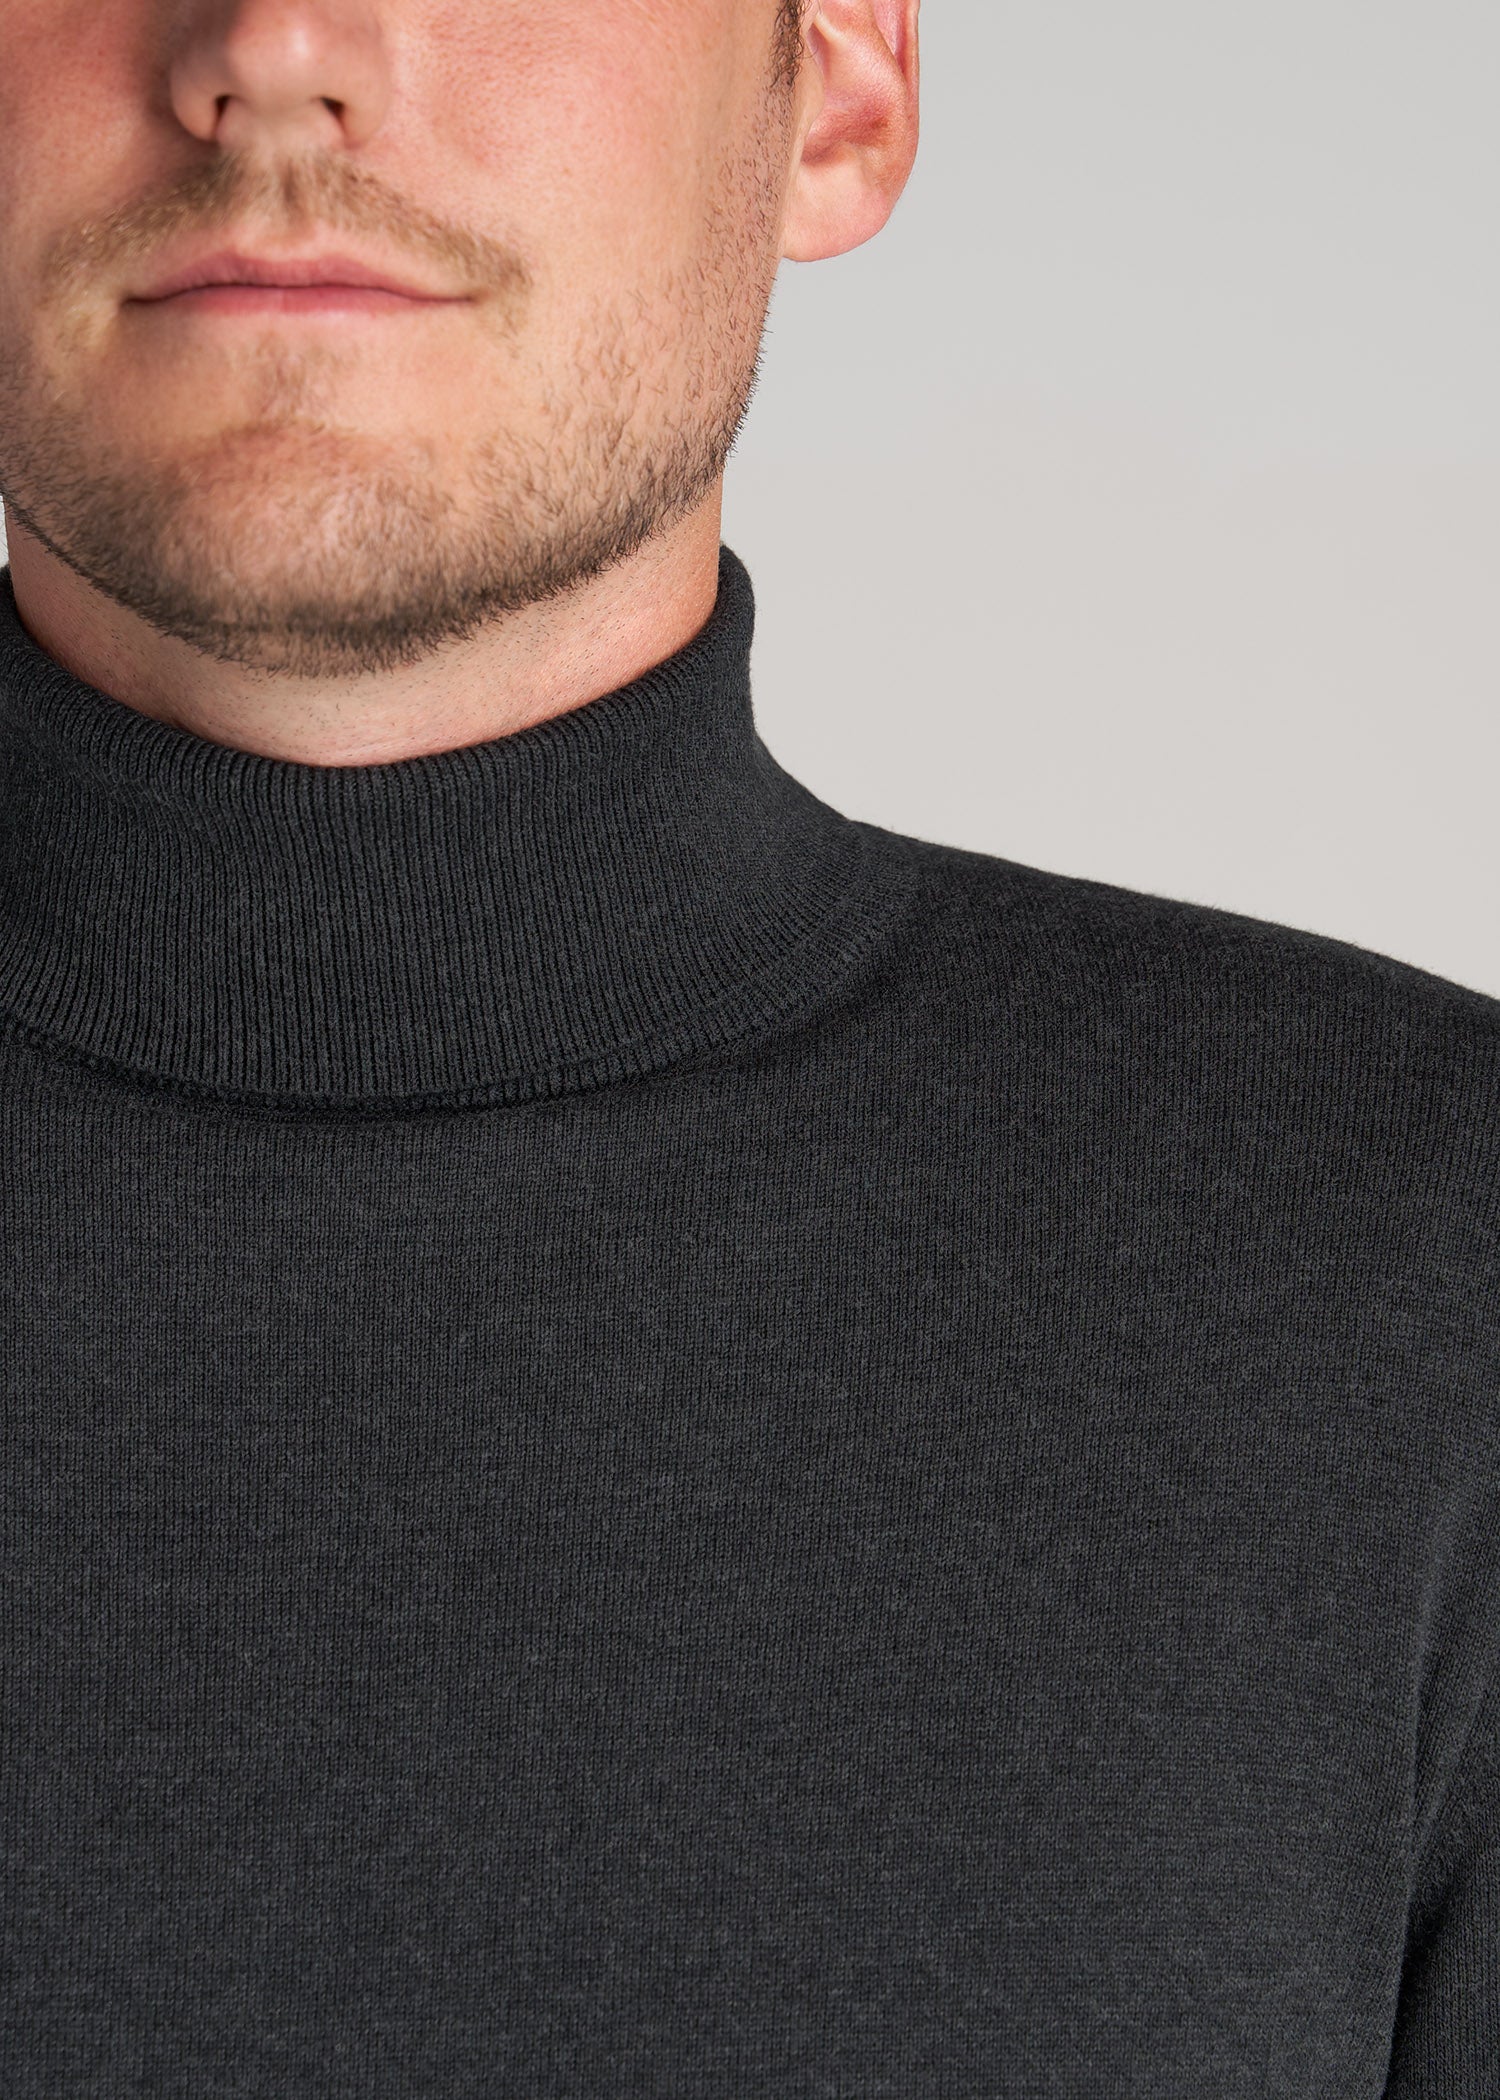 Men's Tall Turtleneck Sweater | American Tall